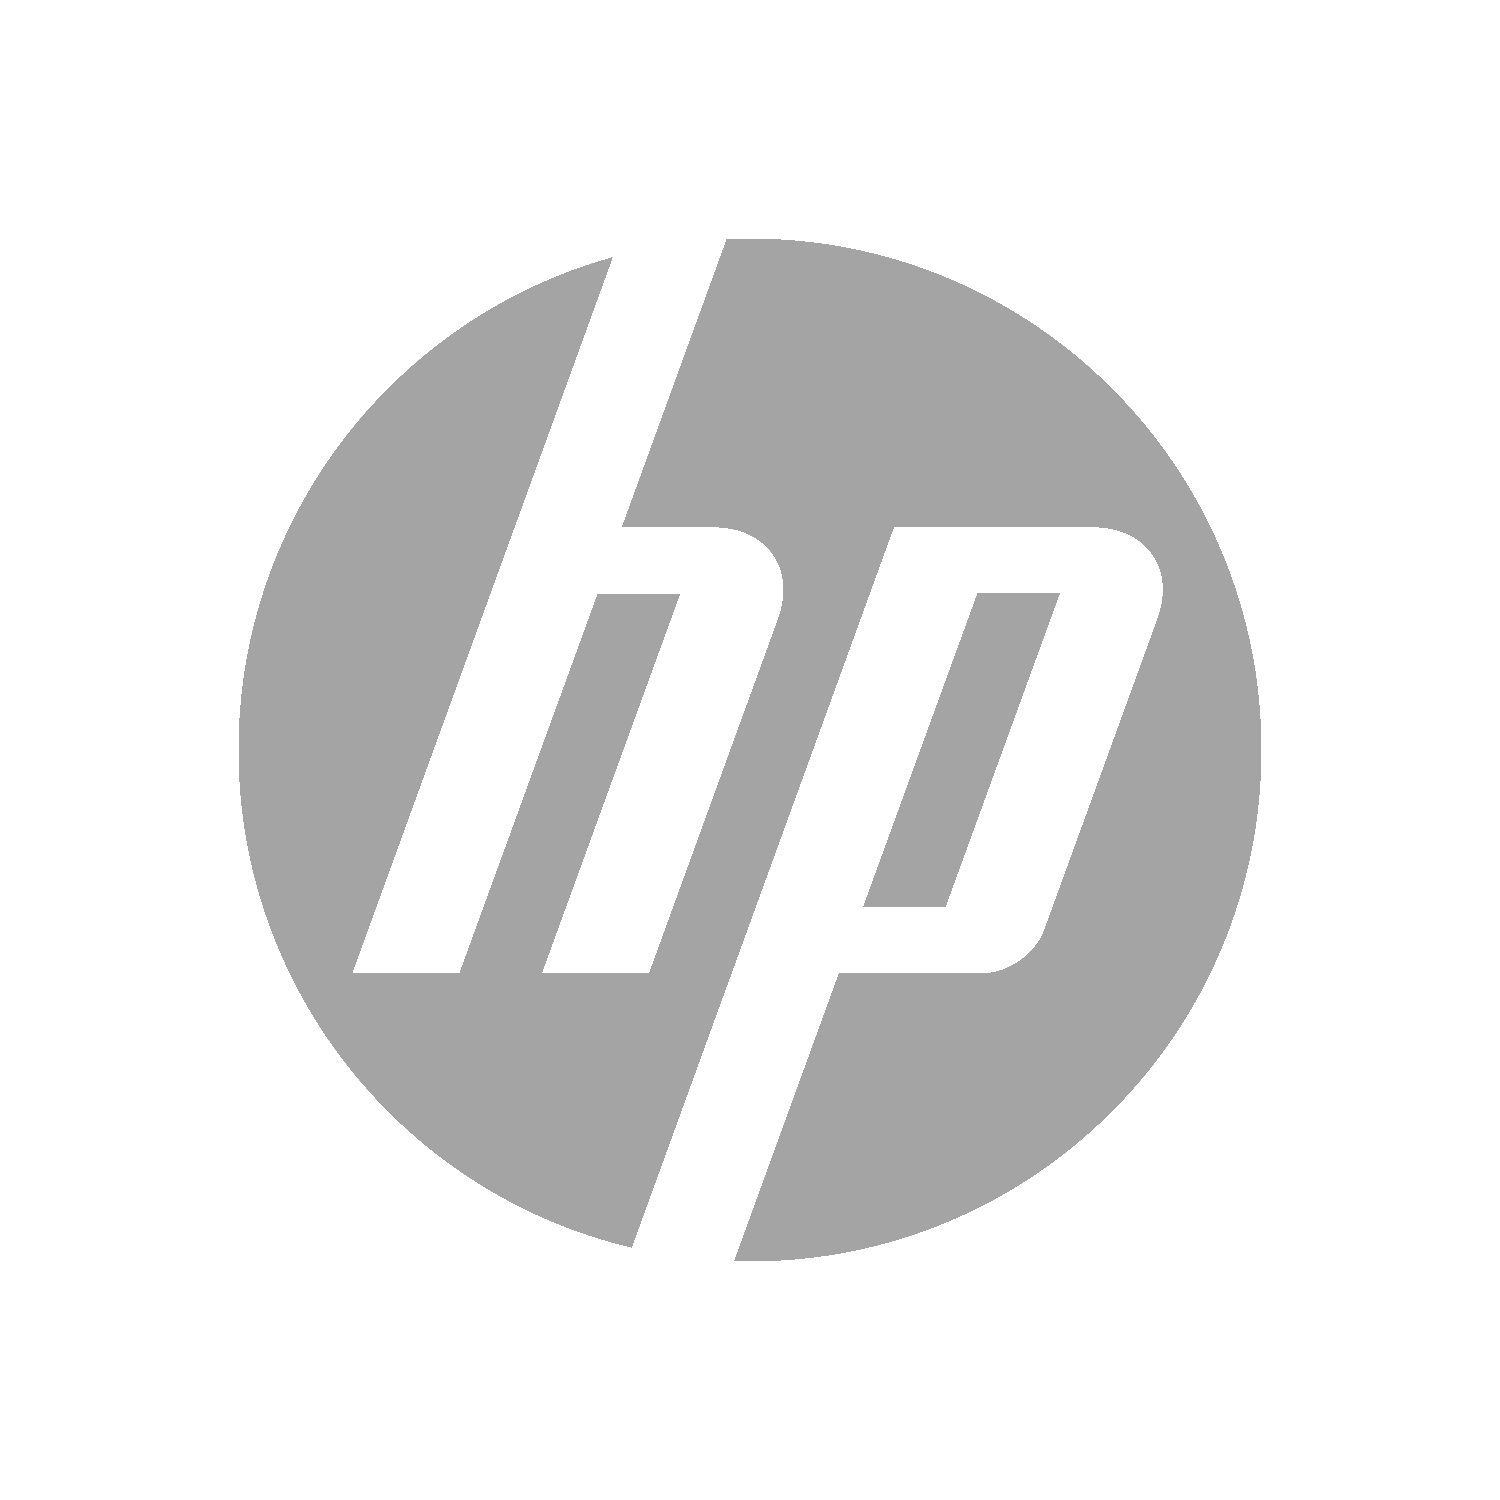 1024px-HP_logo_2012.png